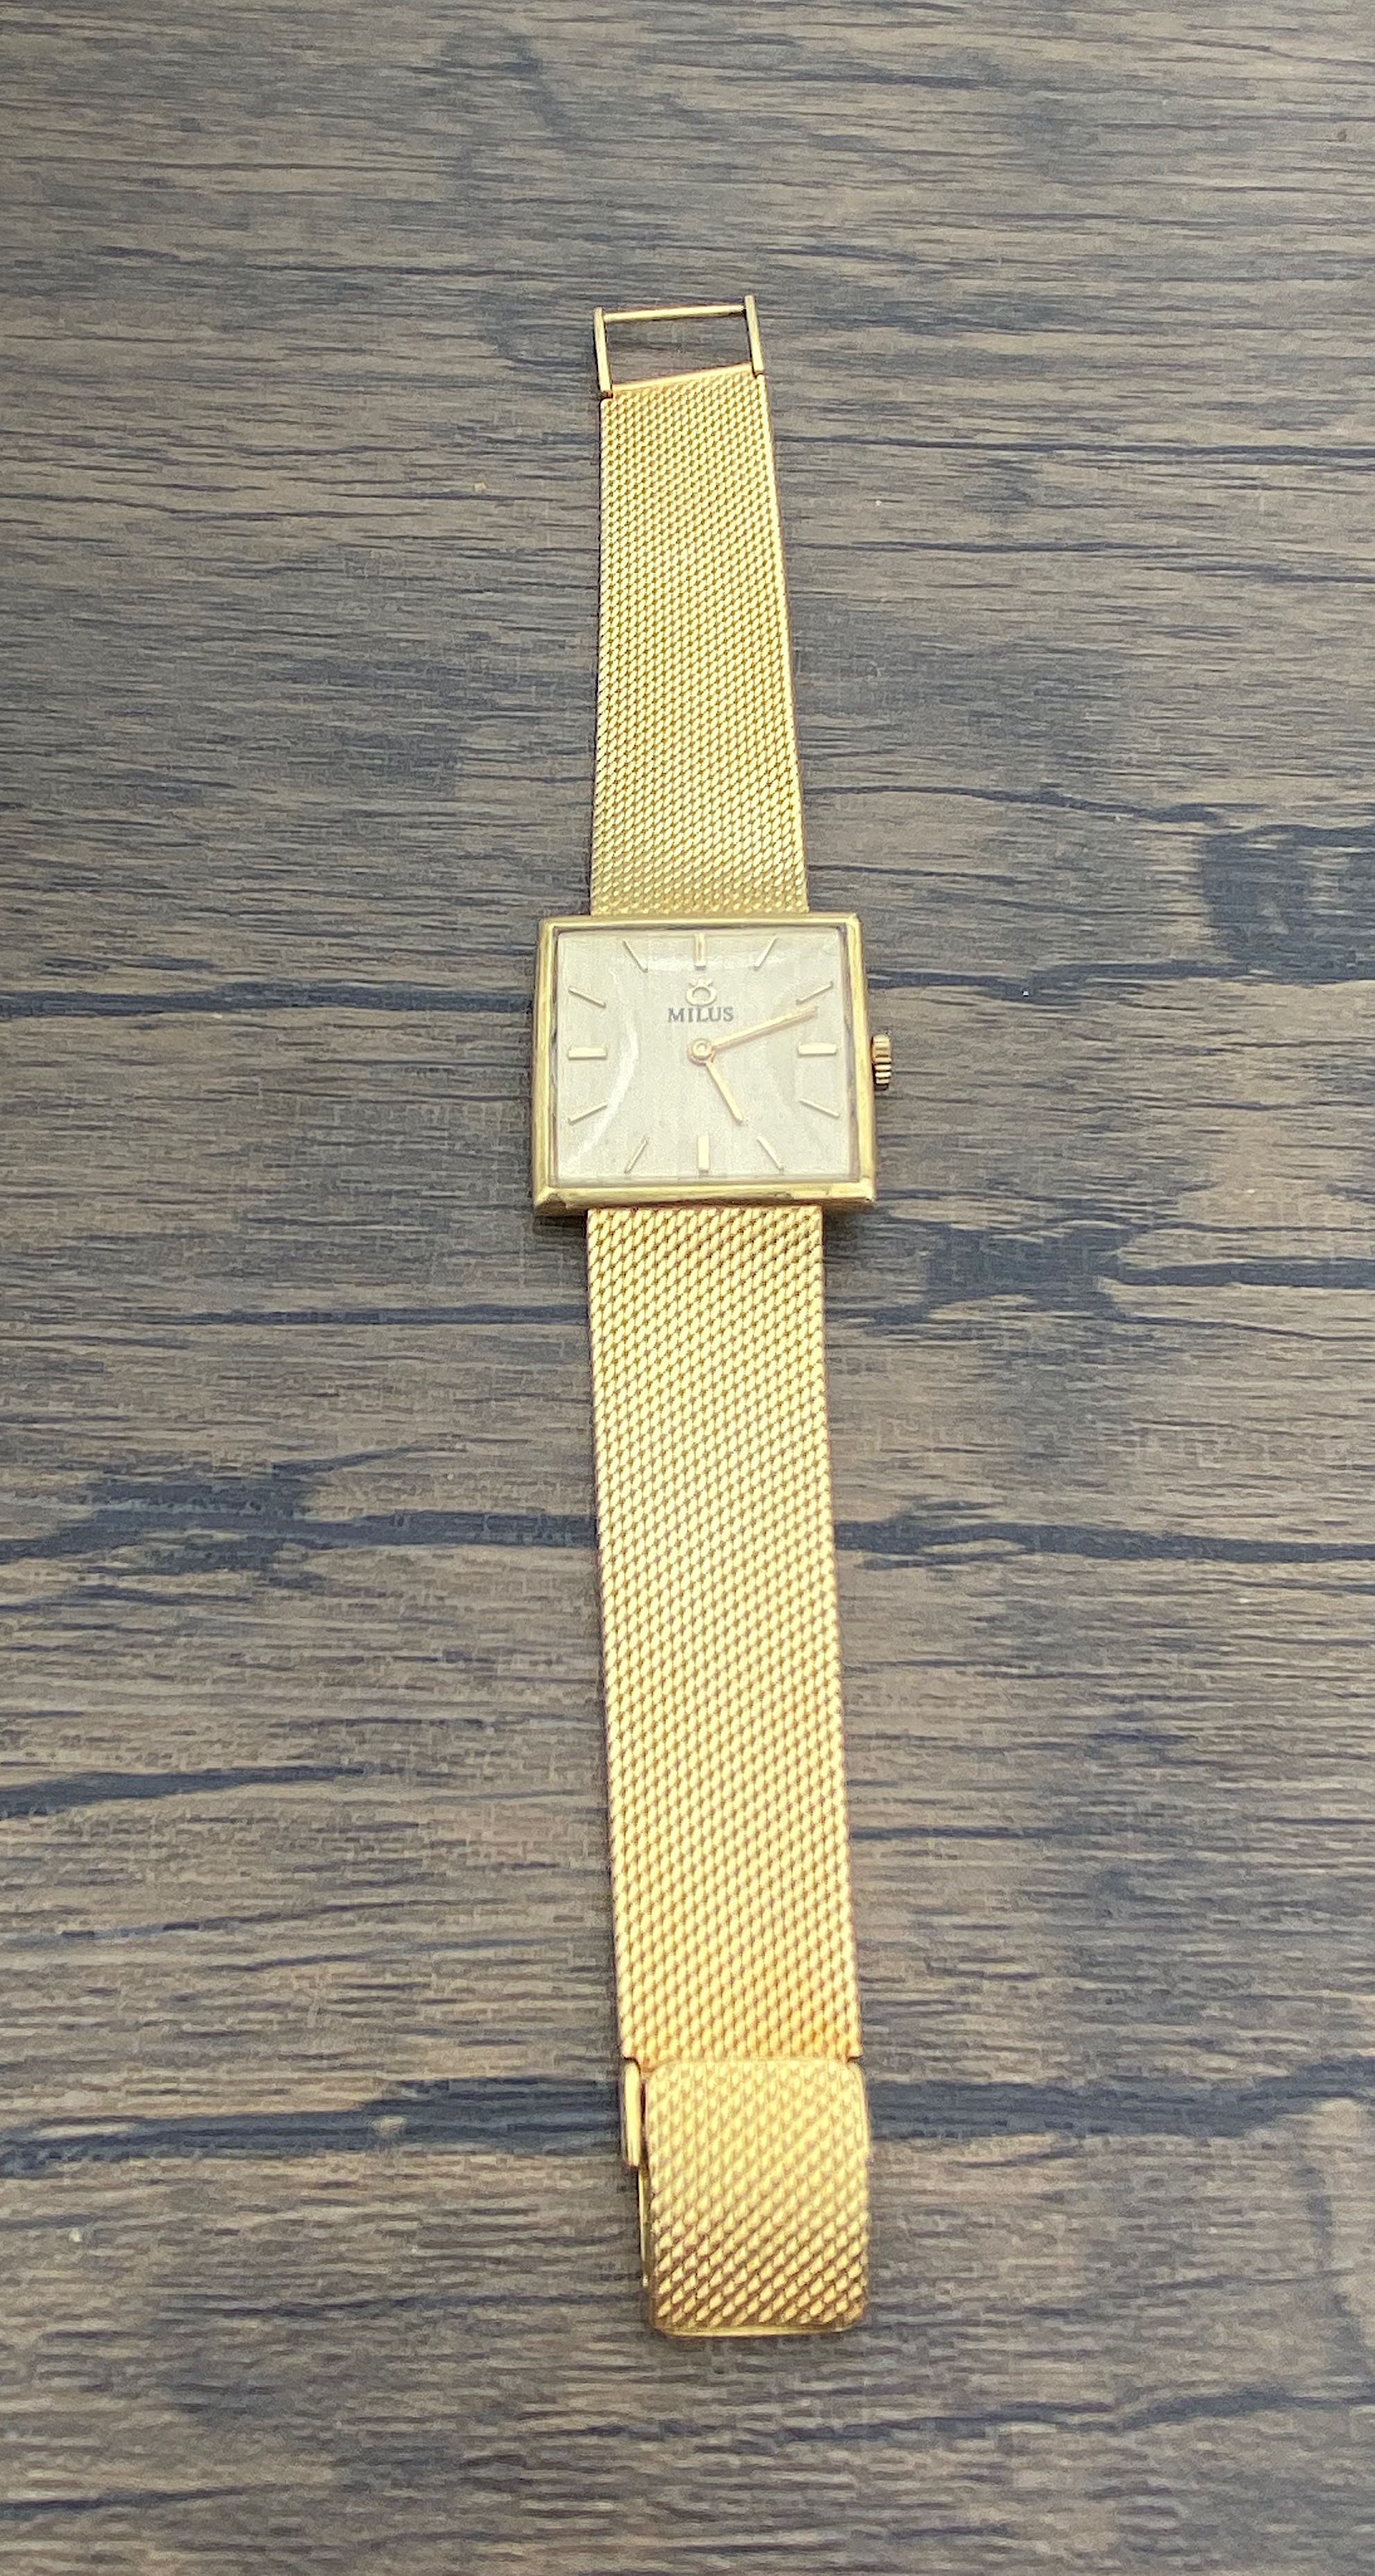 Men's wrist watch Milus in 750 gold - Image 3 of 5